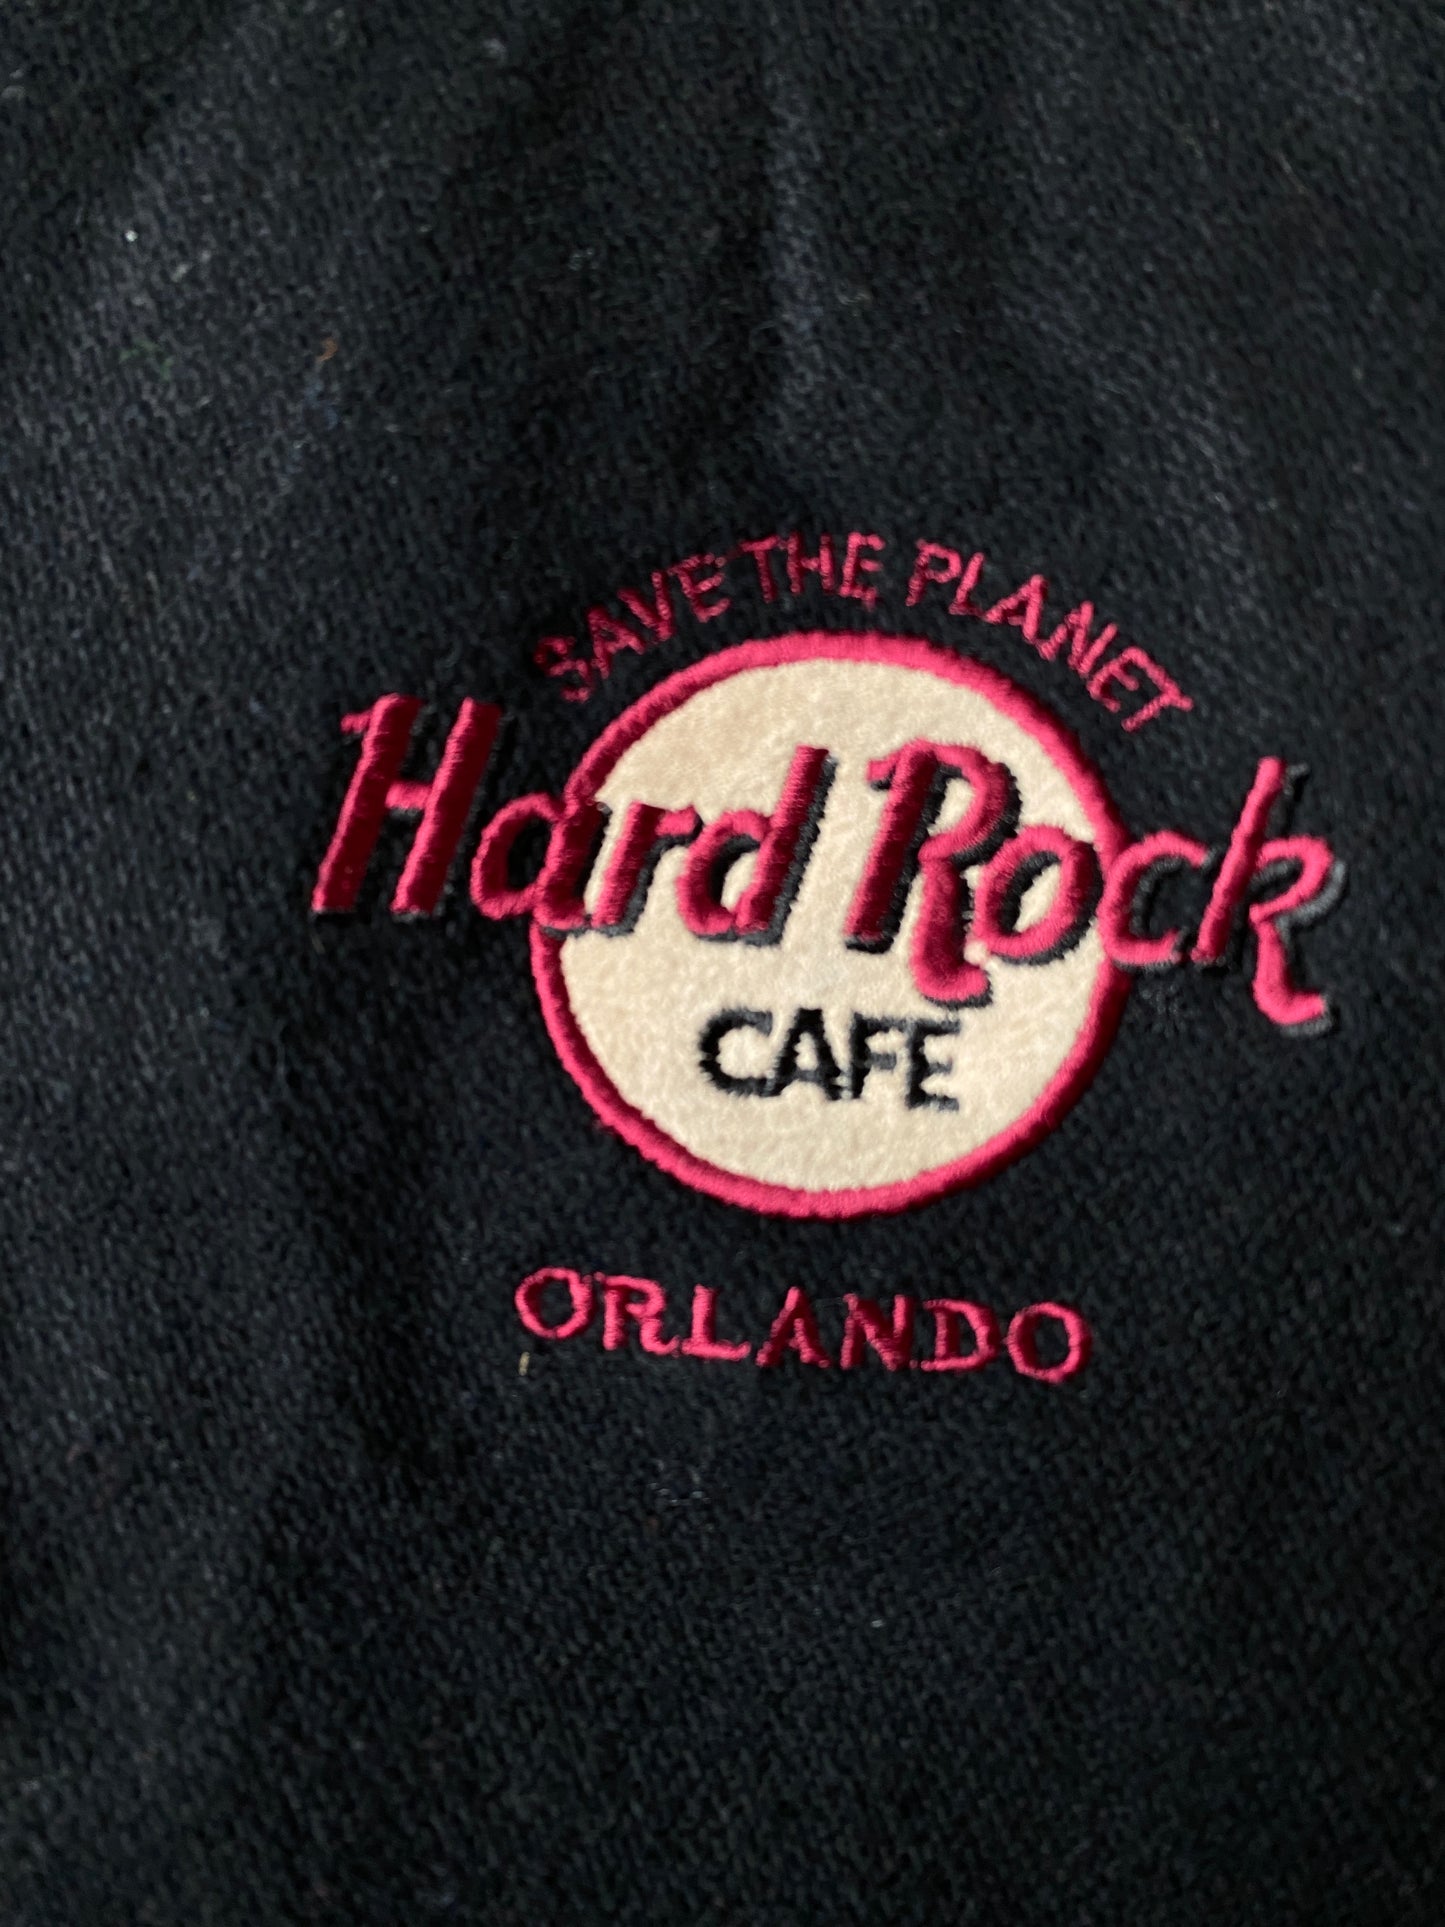 Save the Planet, Hard Rock Orlando (XL)